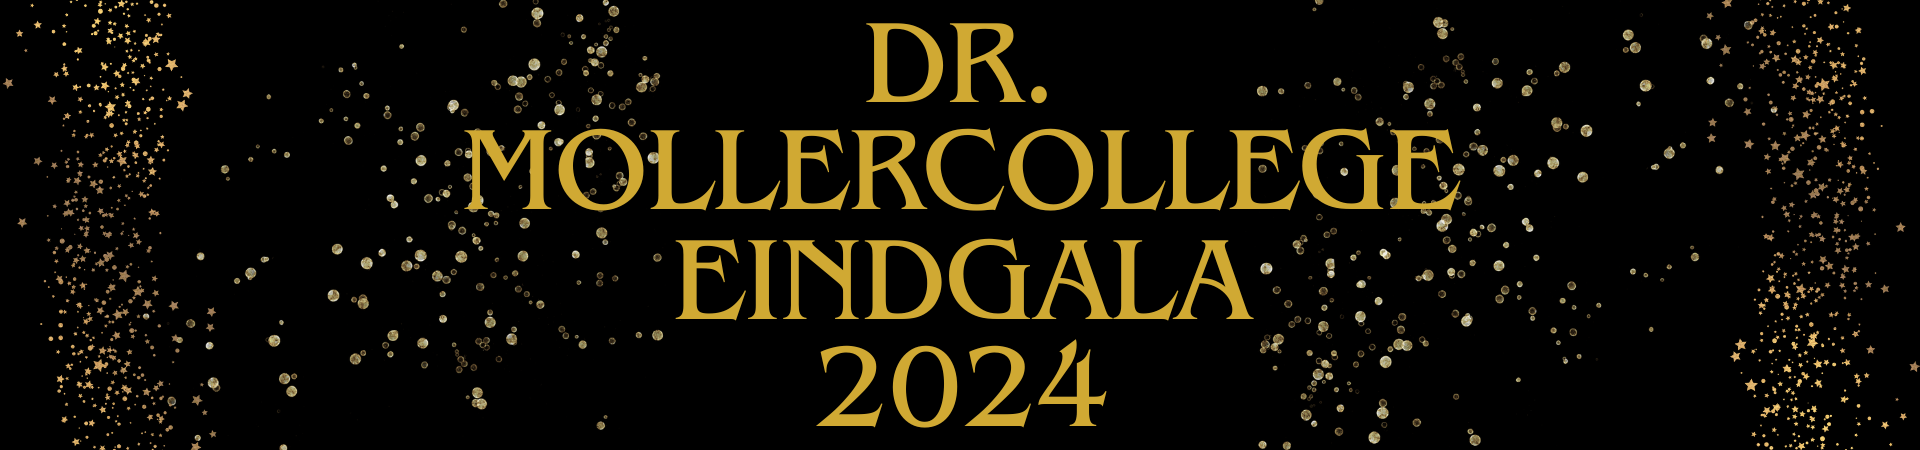 Dr. Mollercollege Eindgala - Tavenu 2024